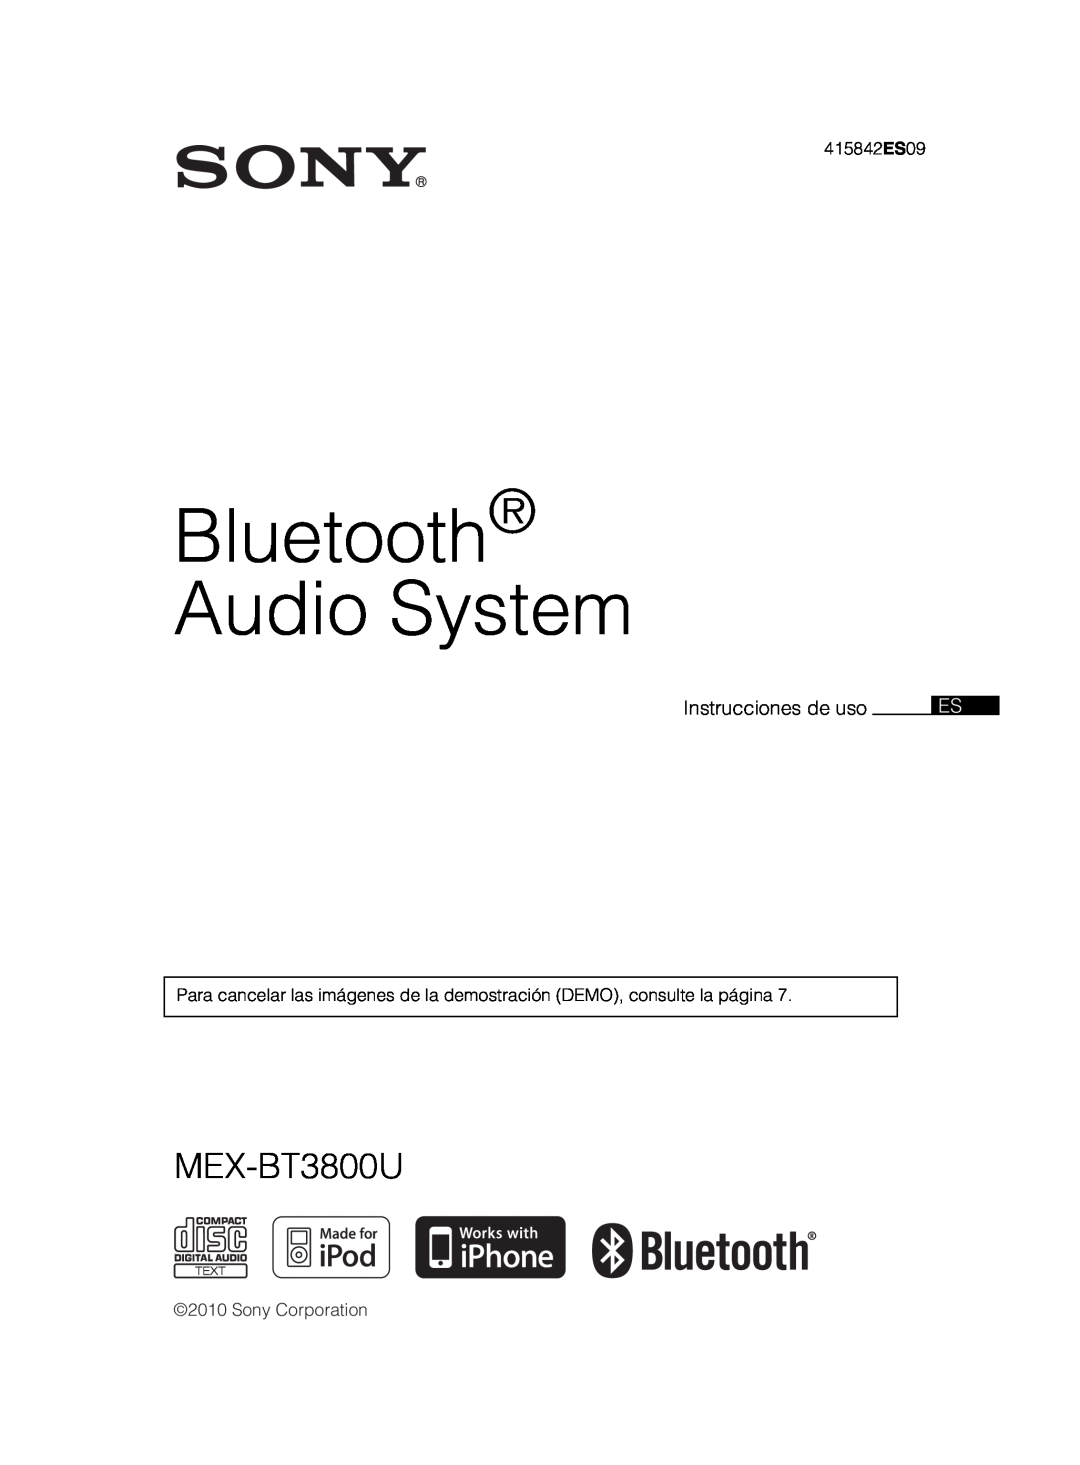 Sony MEX-BT3800U manual Bluetooth Audio System, Instrucciones de uso, 415842ES09, Sony Corporation 